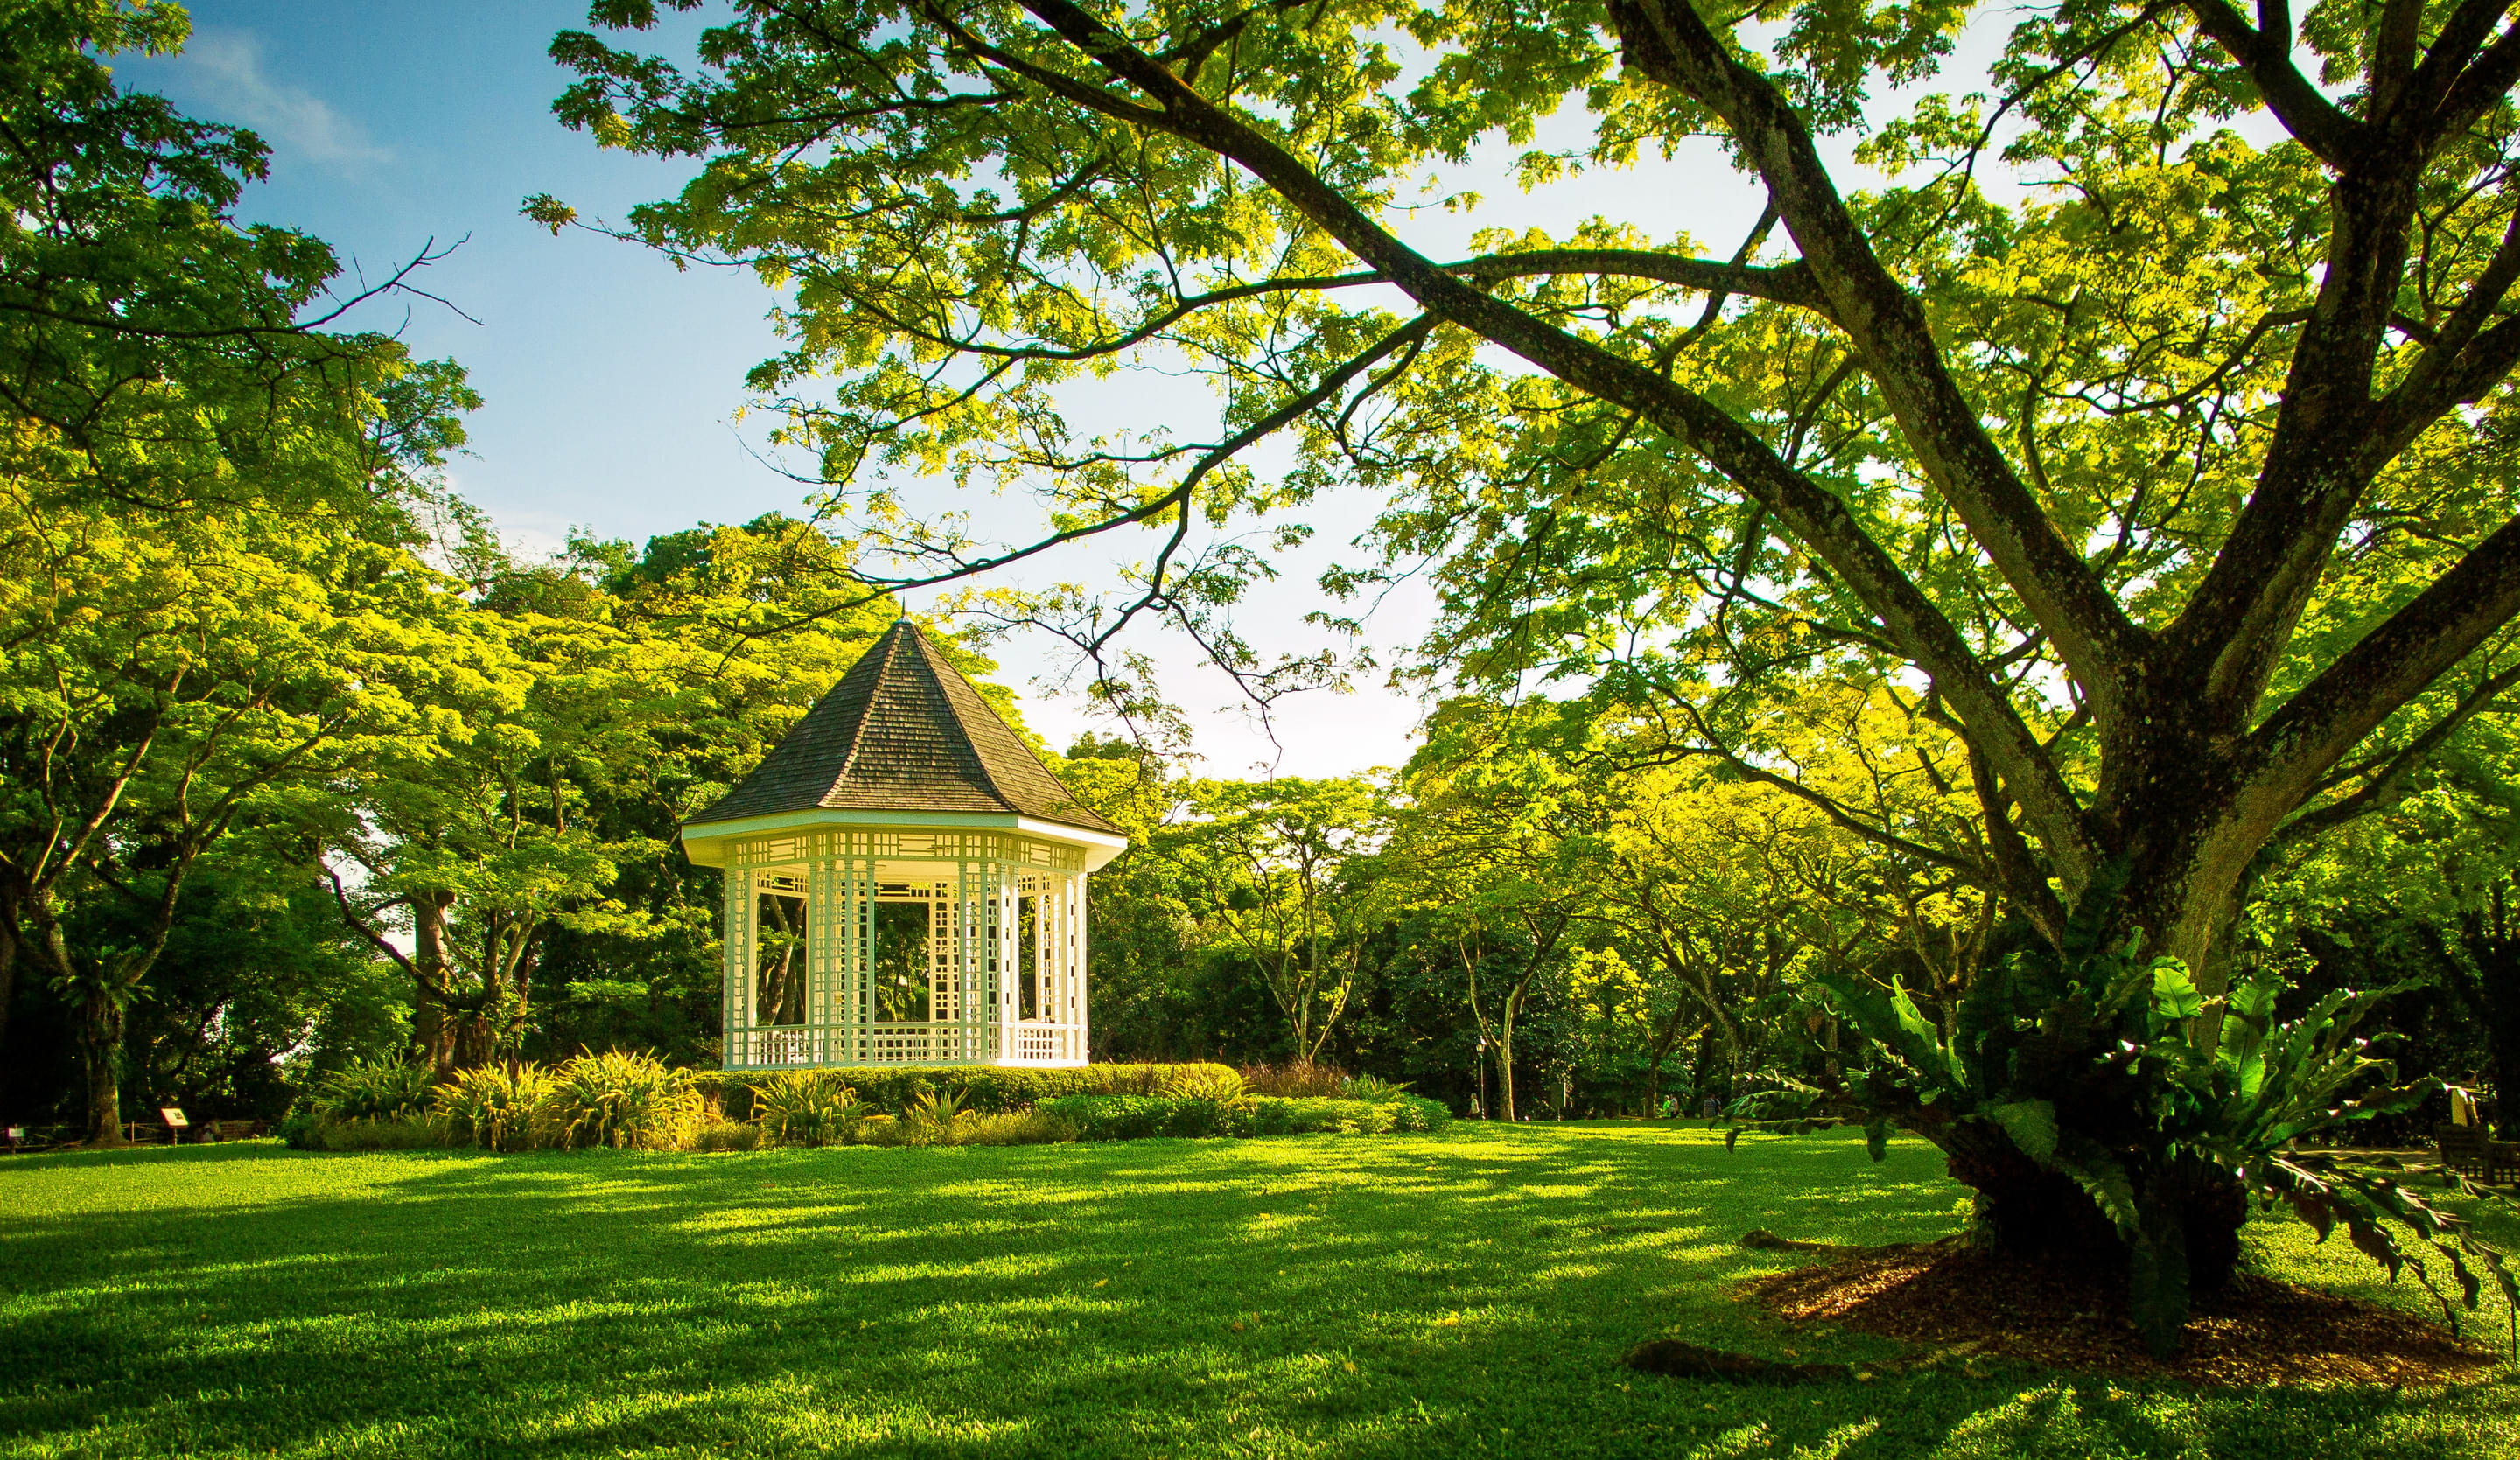 Singapore Botanic Gardens Overview